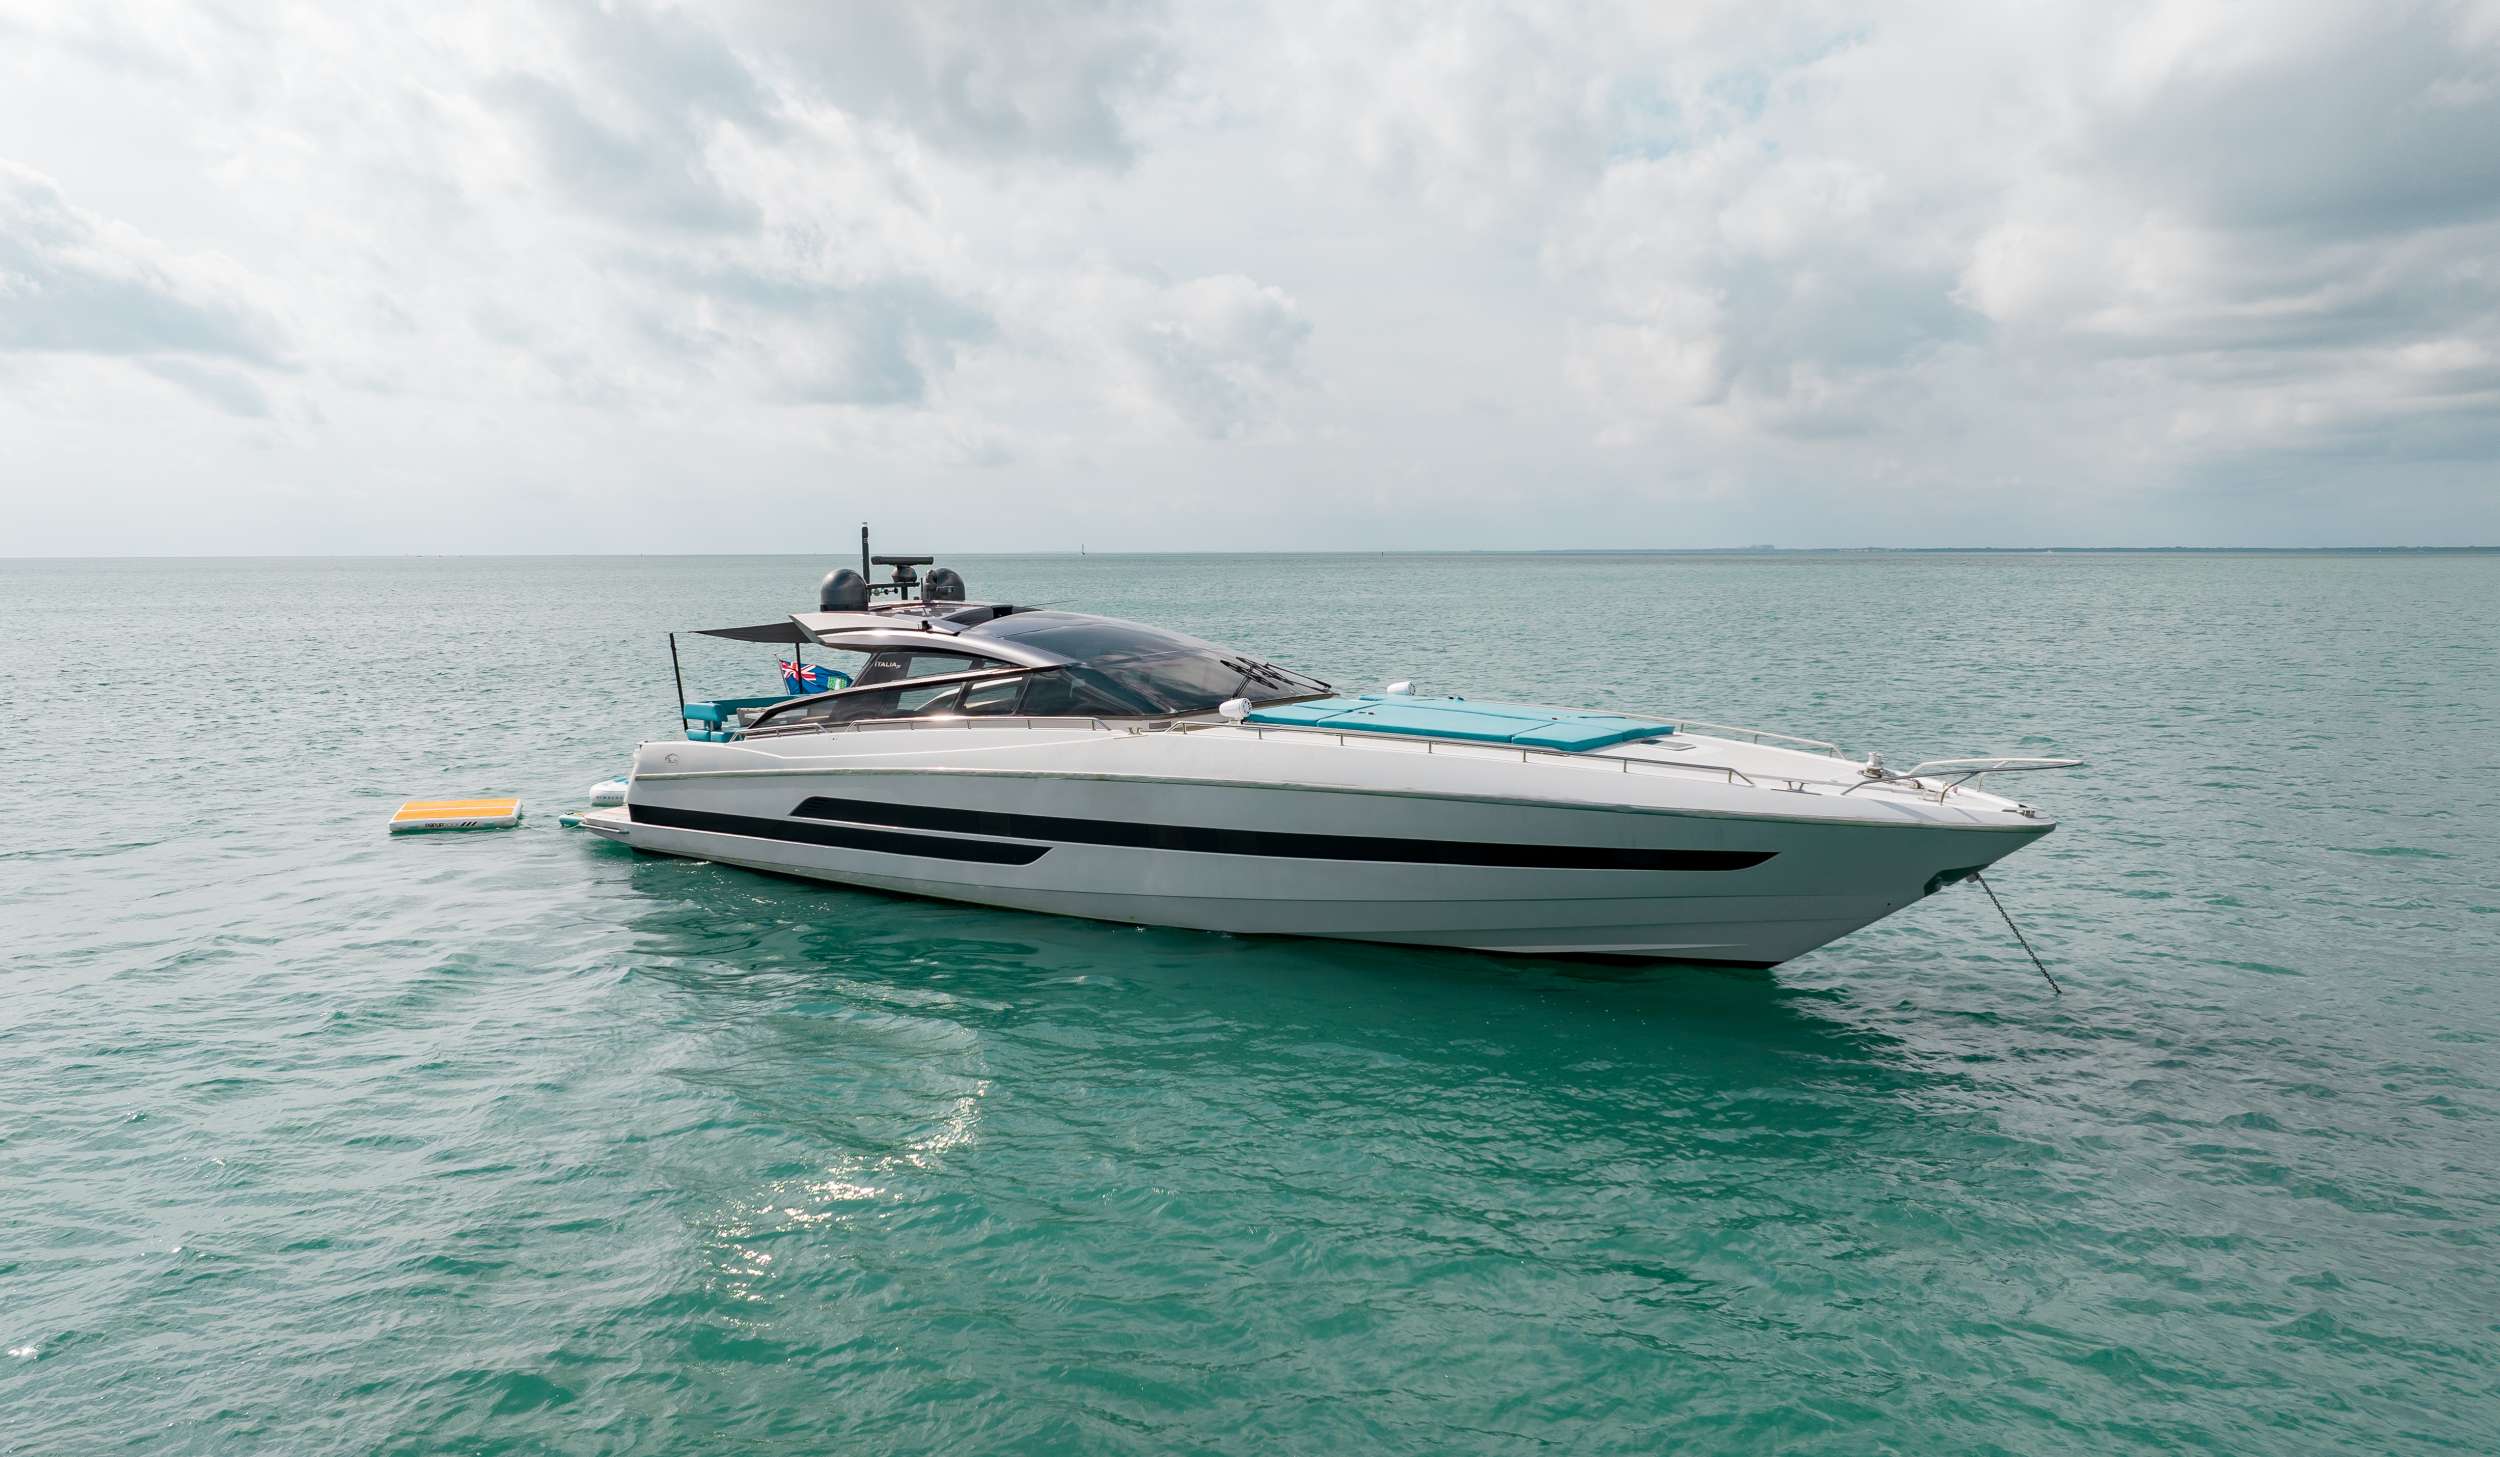 Water Jump II - Motor Boat Charter USA & Boat hire in US East Coast & Bahamas 1